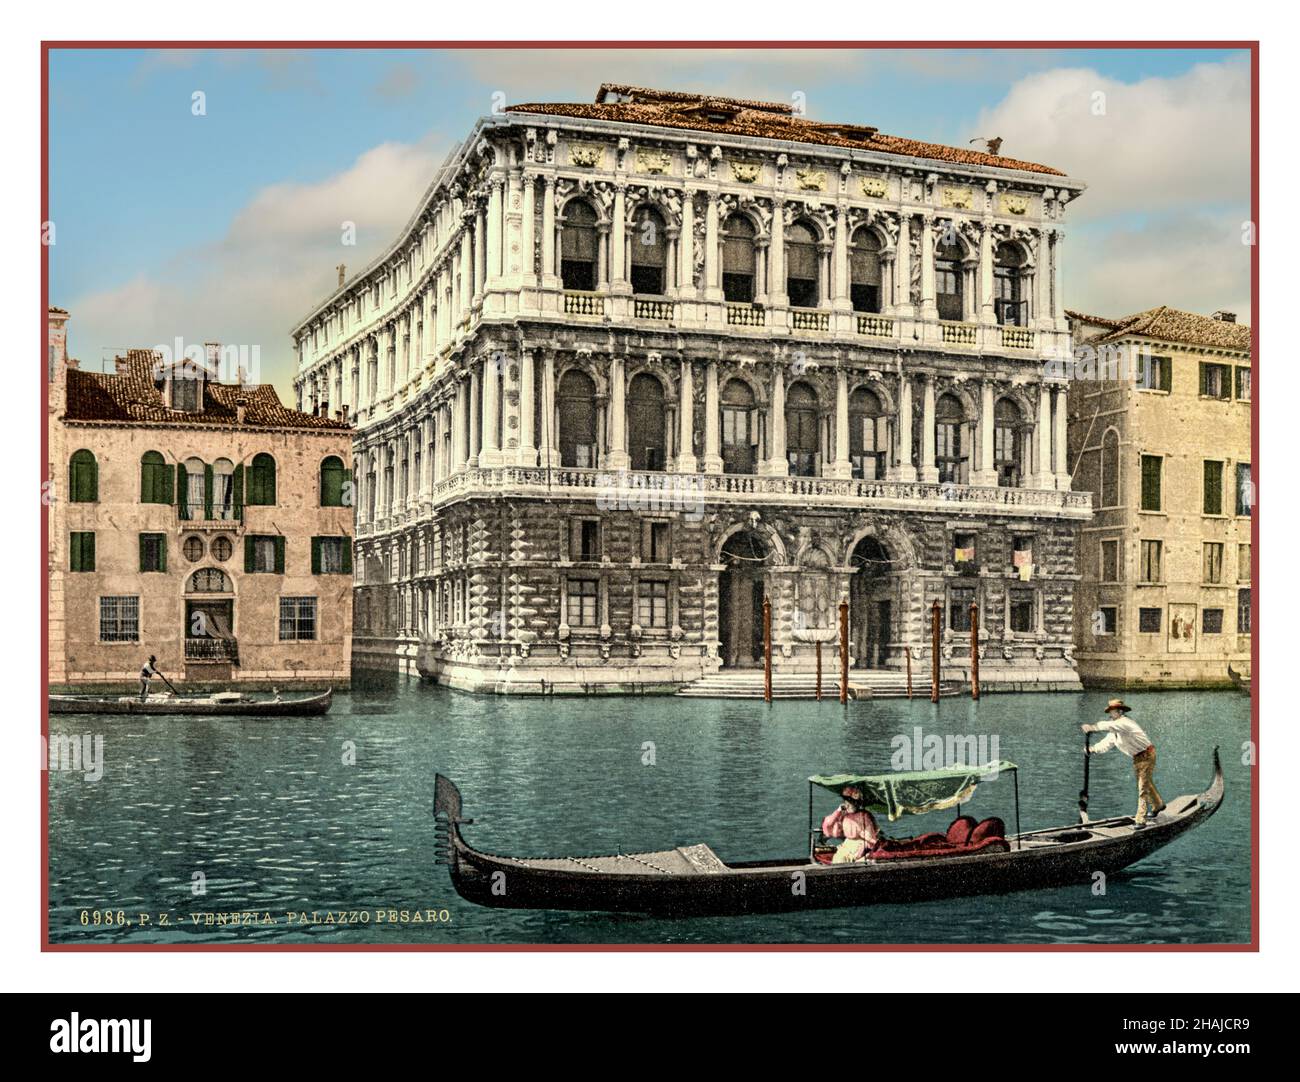 Pesaro Palace, Venice, Italy 1900 photochrom image colour technique, with gondola in foreground gondolier and female passenger Grand Canal Venice Italy 'VENEZIA PALAZZO PESARO' Stock Photo